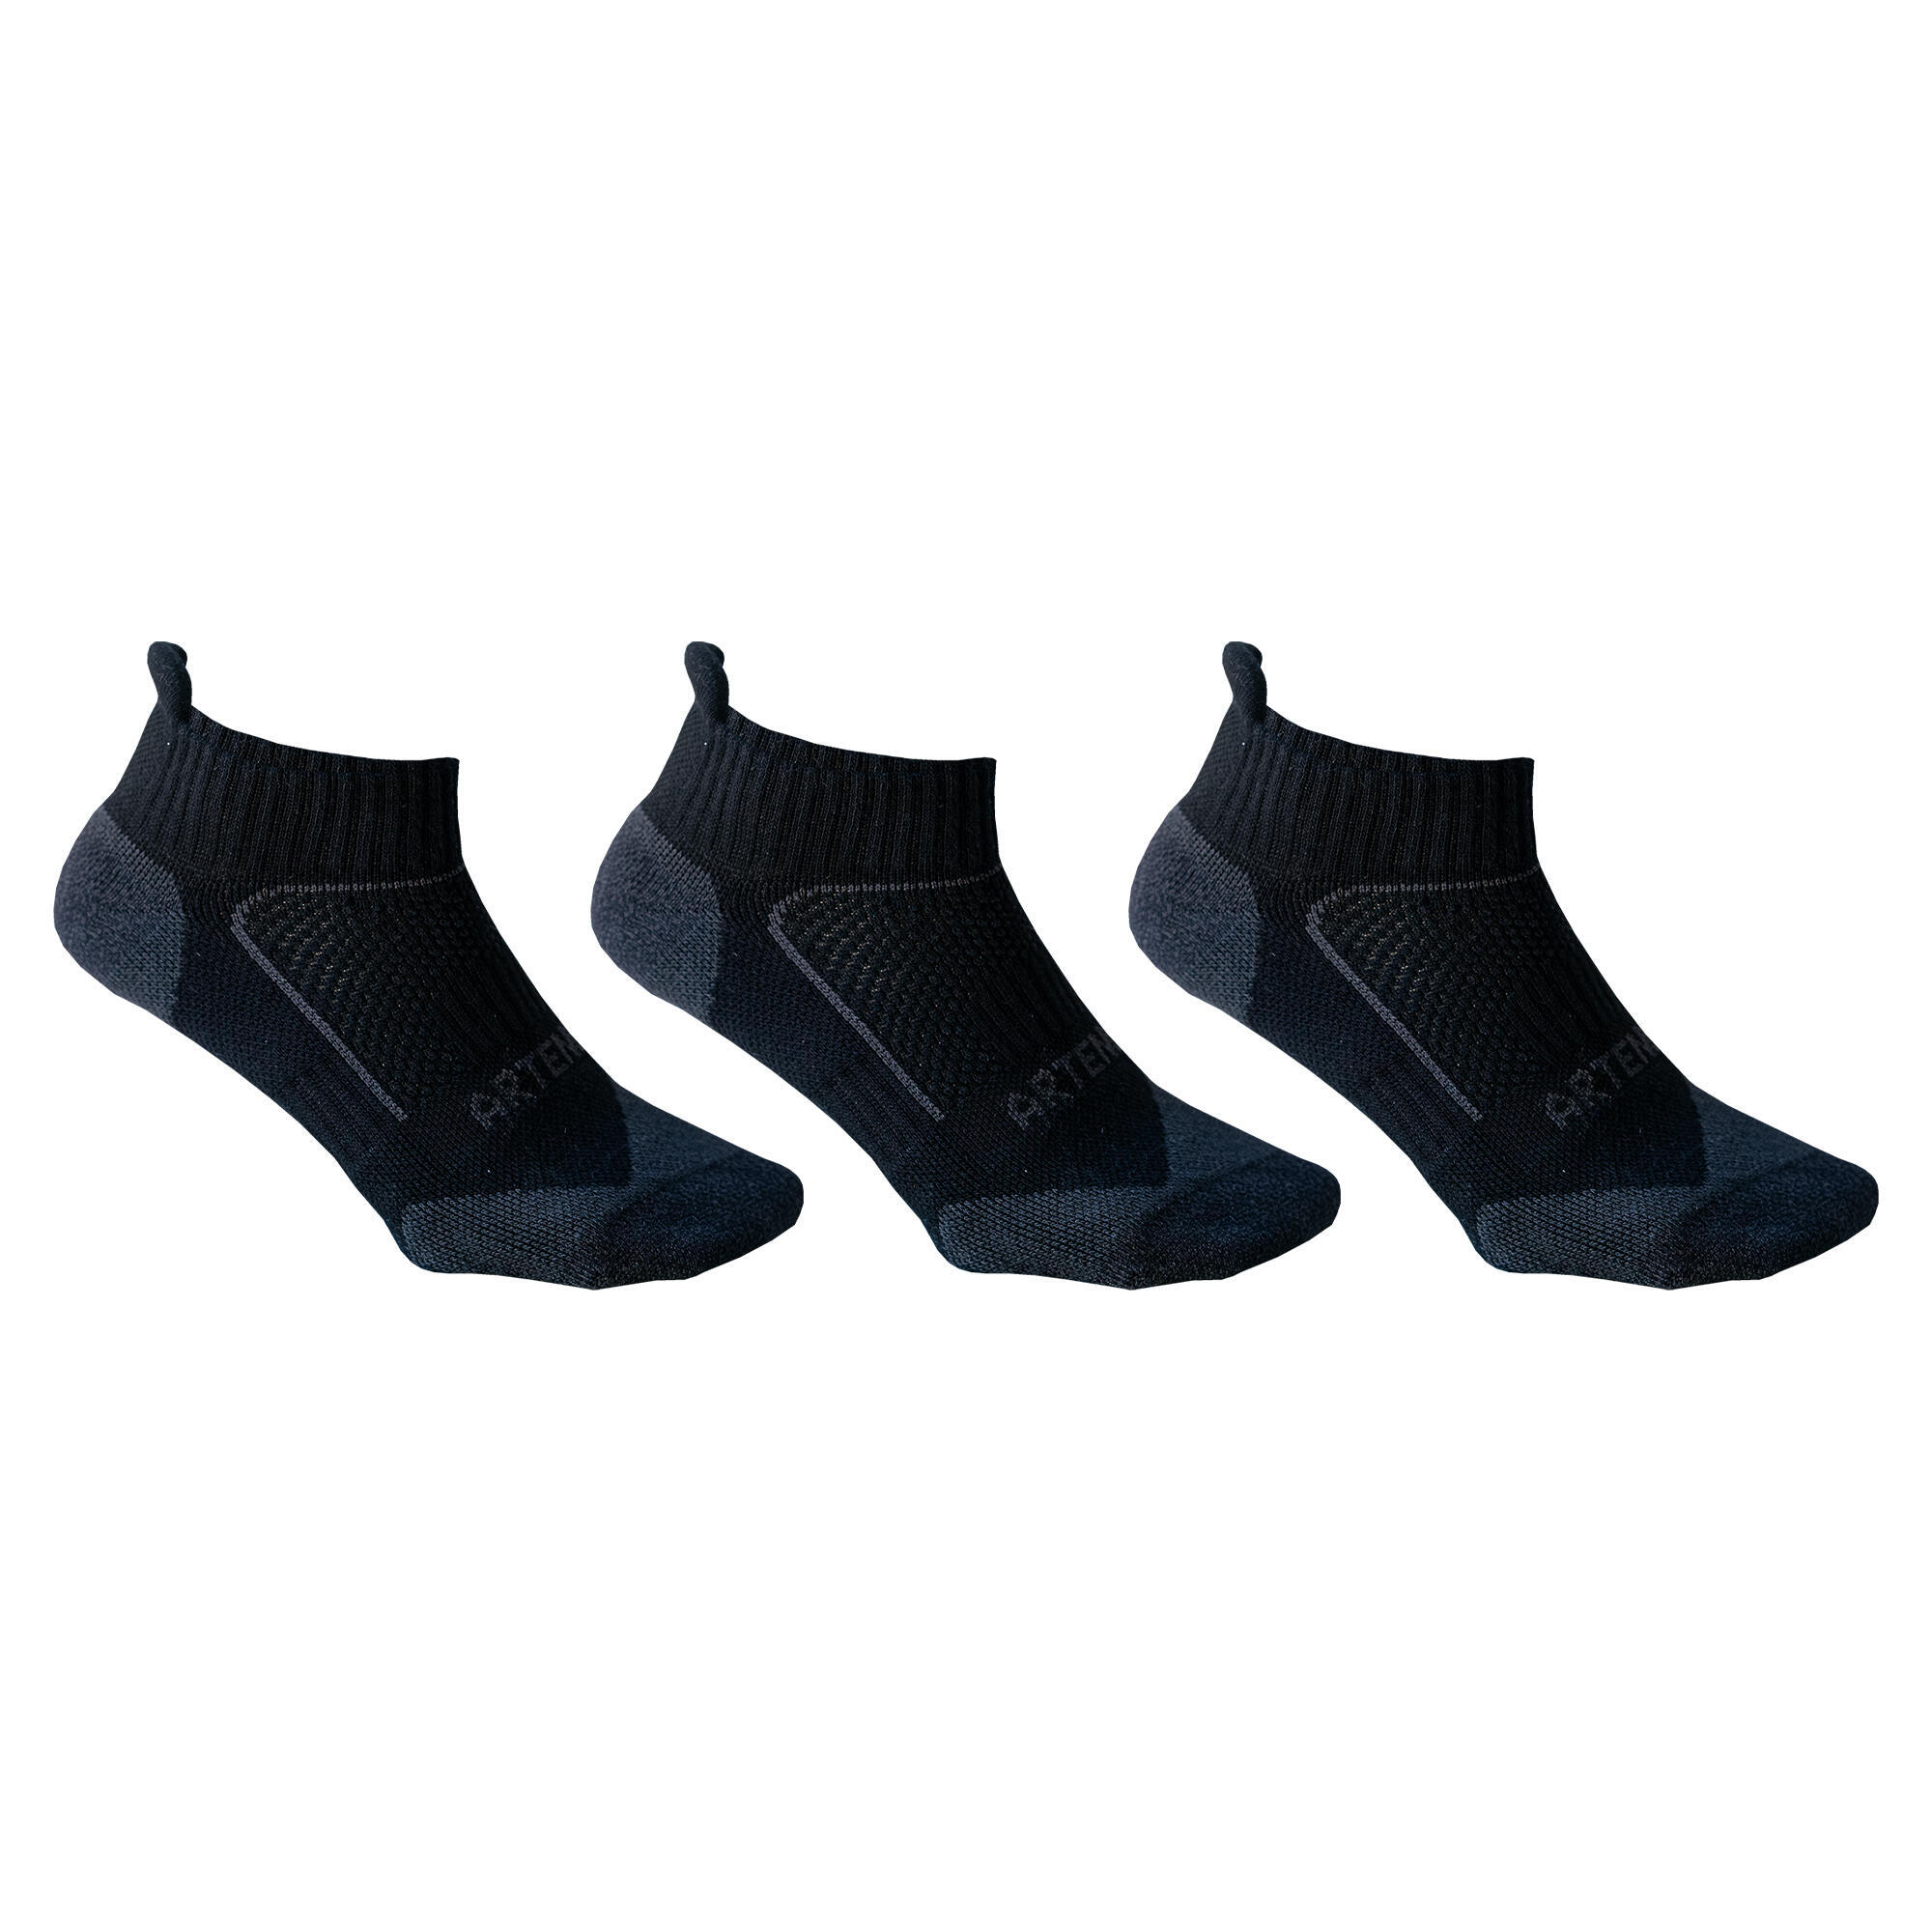 Low Sport Socks RS 900 Tri-Pack - Black/Grey 2/4